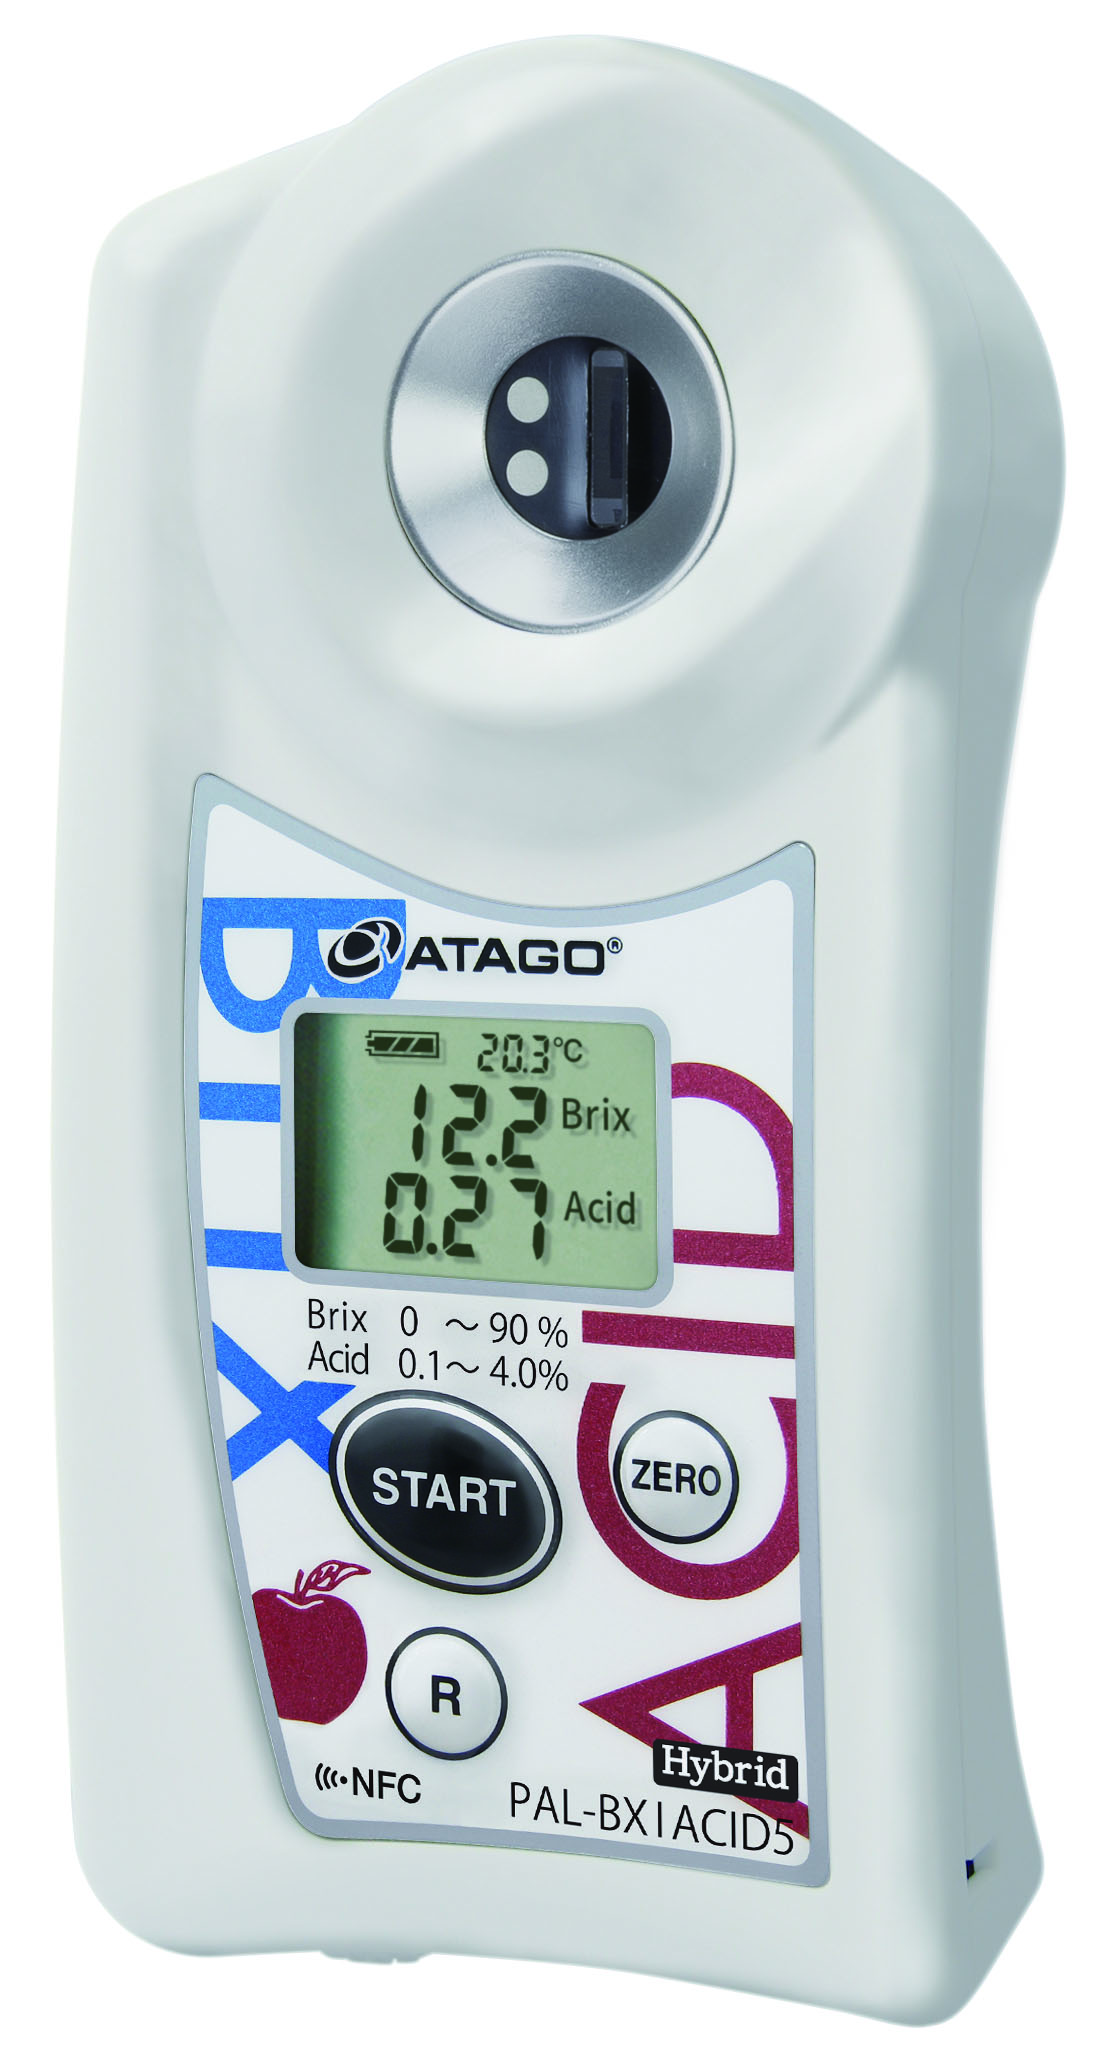 Atago 7105 Pocket Brix-Acidity Meter Apple PAL-BX|ACID5 Master Kit, Brix : 0.0 to 90.0％, Acid : 0.10 to 4.00 Measurement Range